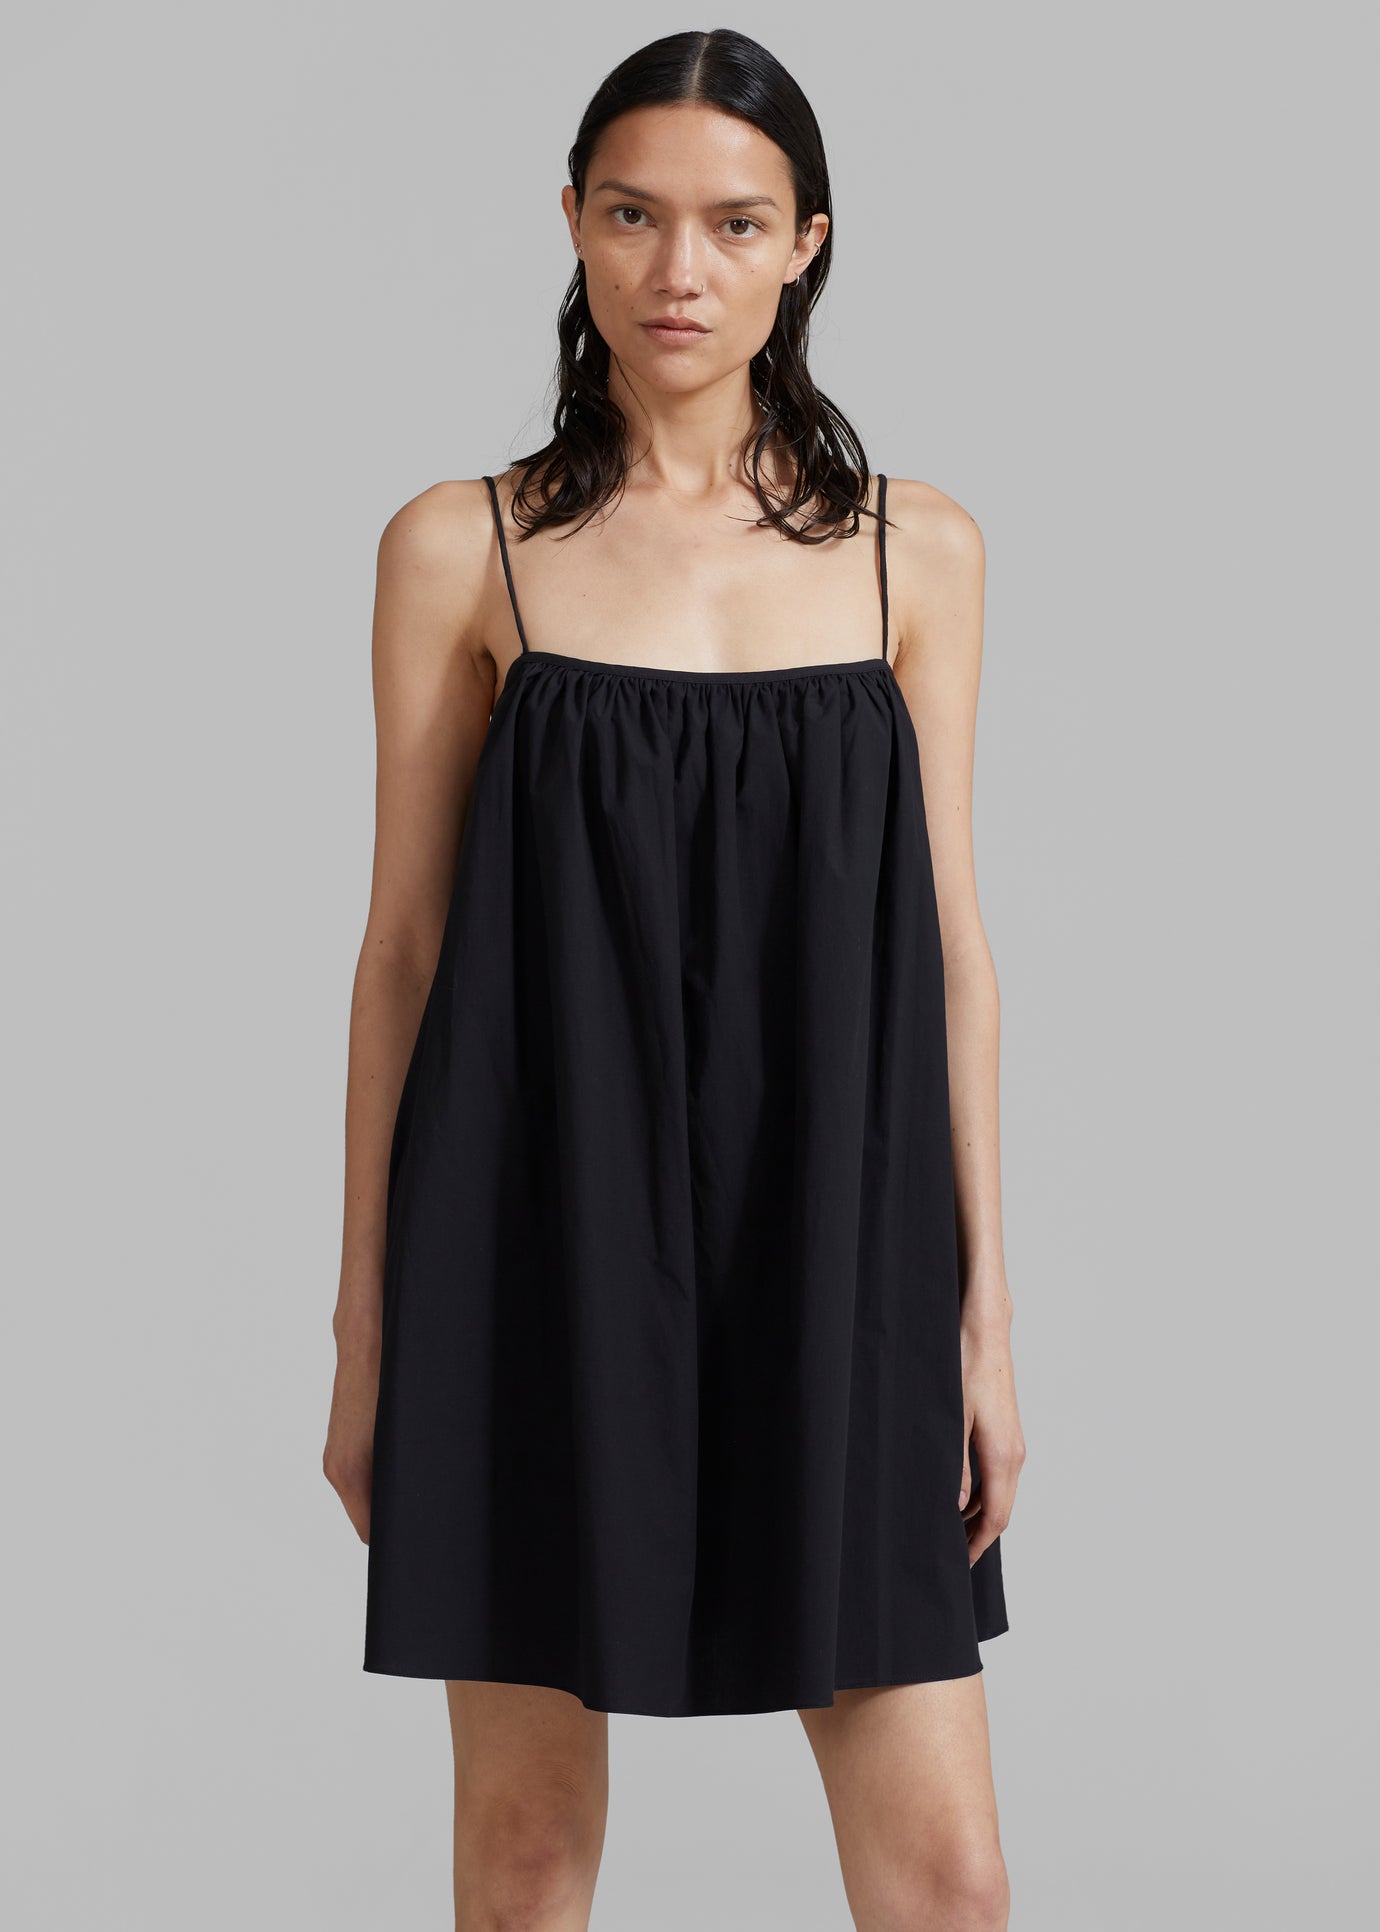 Matteau Voluminous Cami Mini Dress - Black